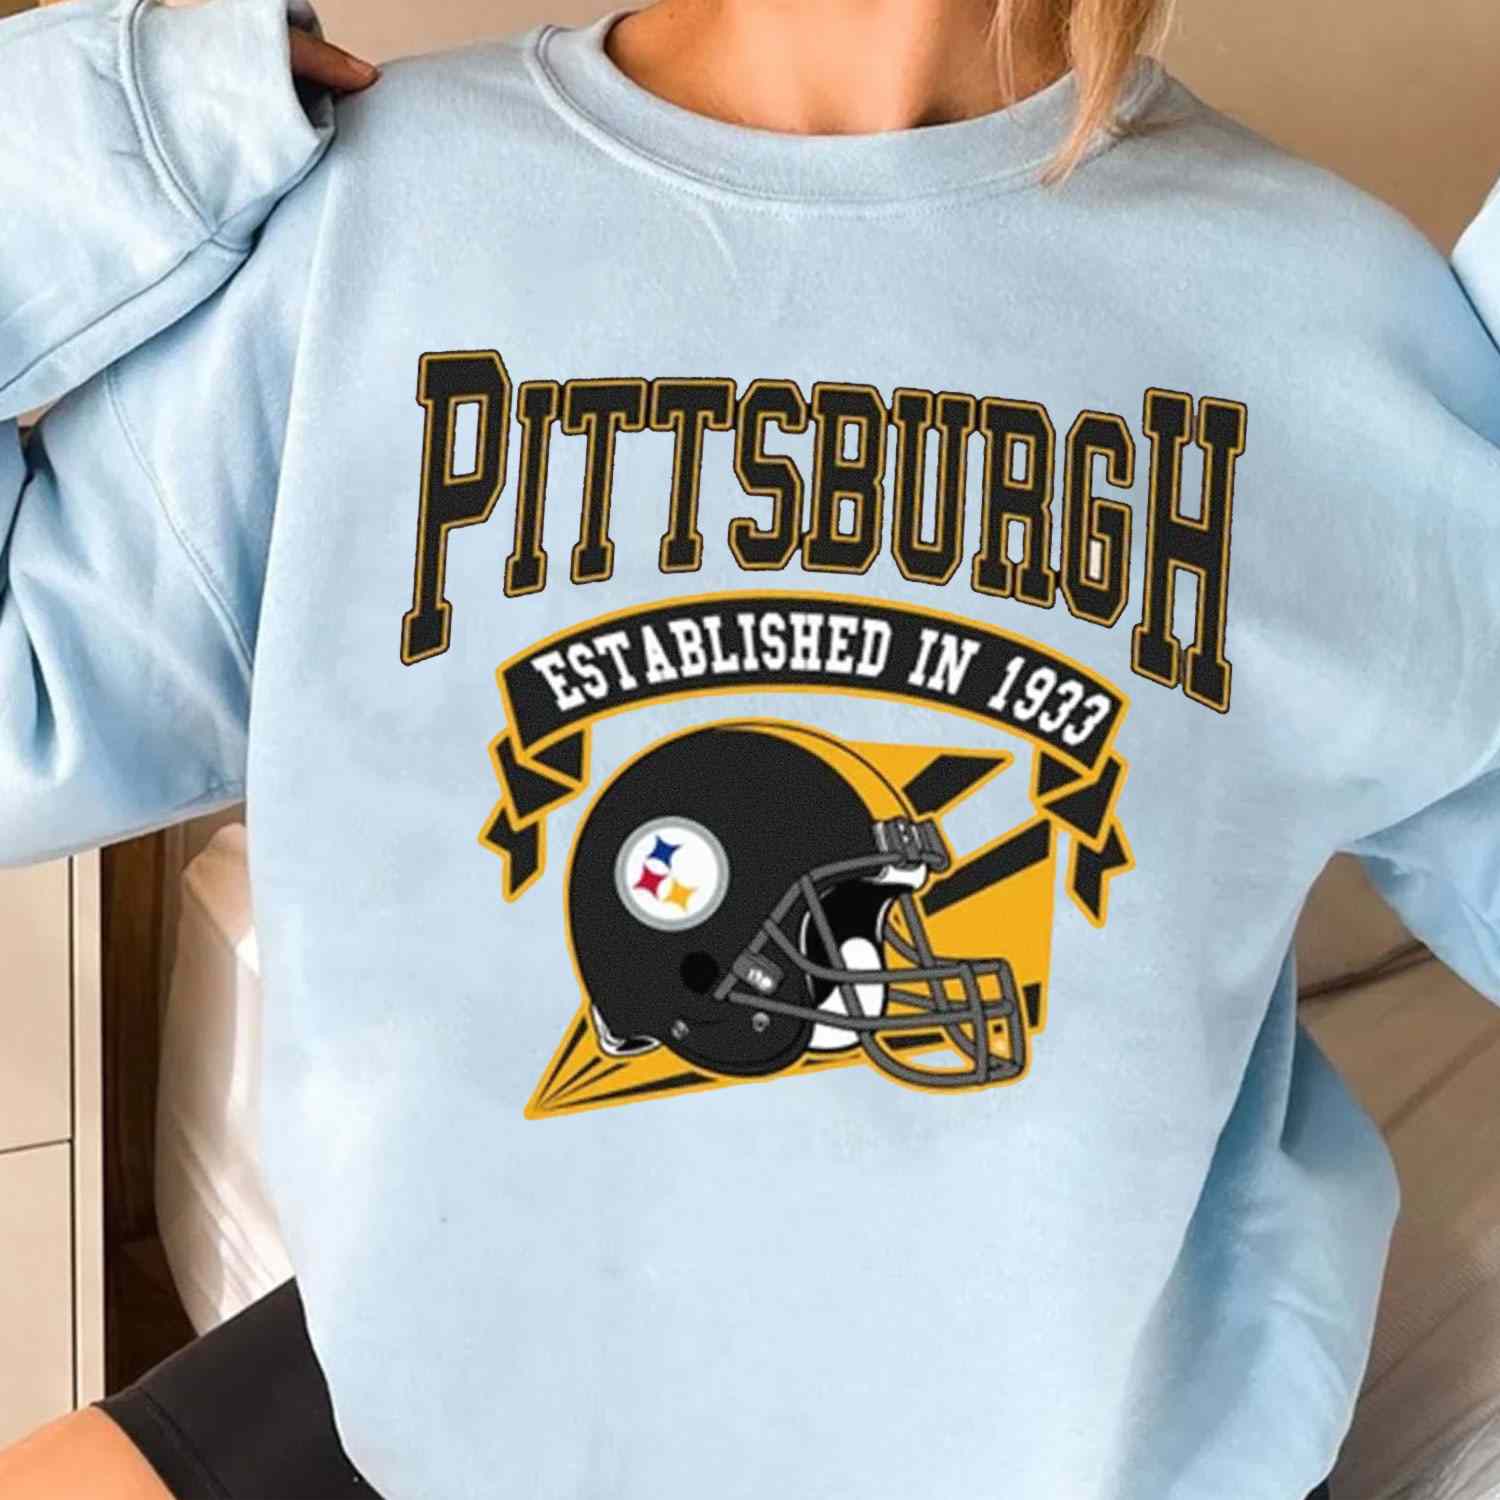 Vintage Football Team Pittsburgh Steelers Established In 1993 T-Shirt